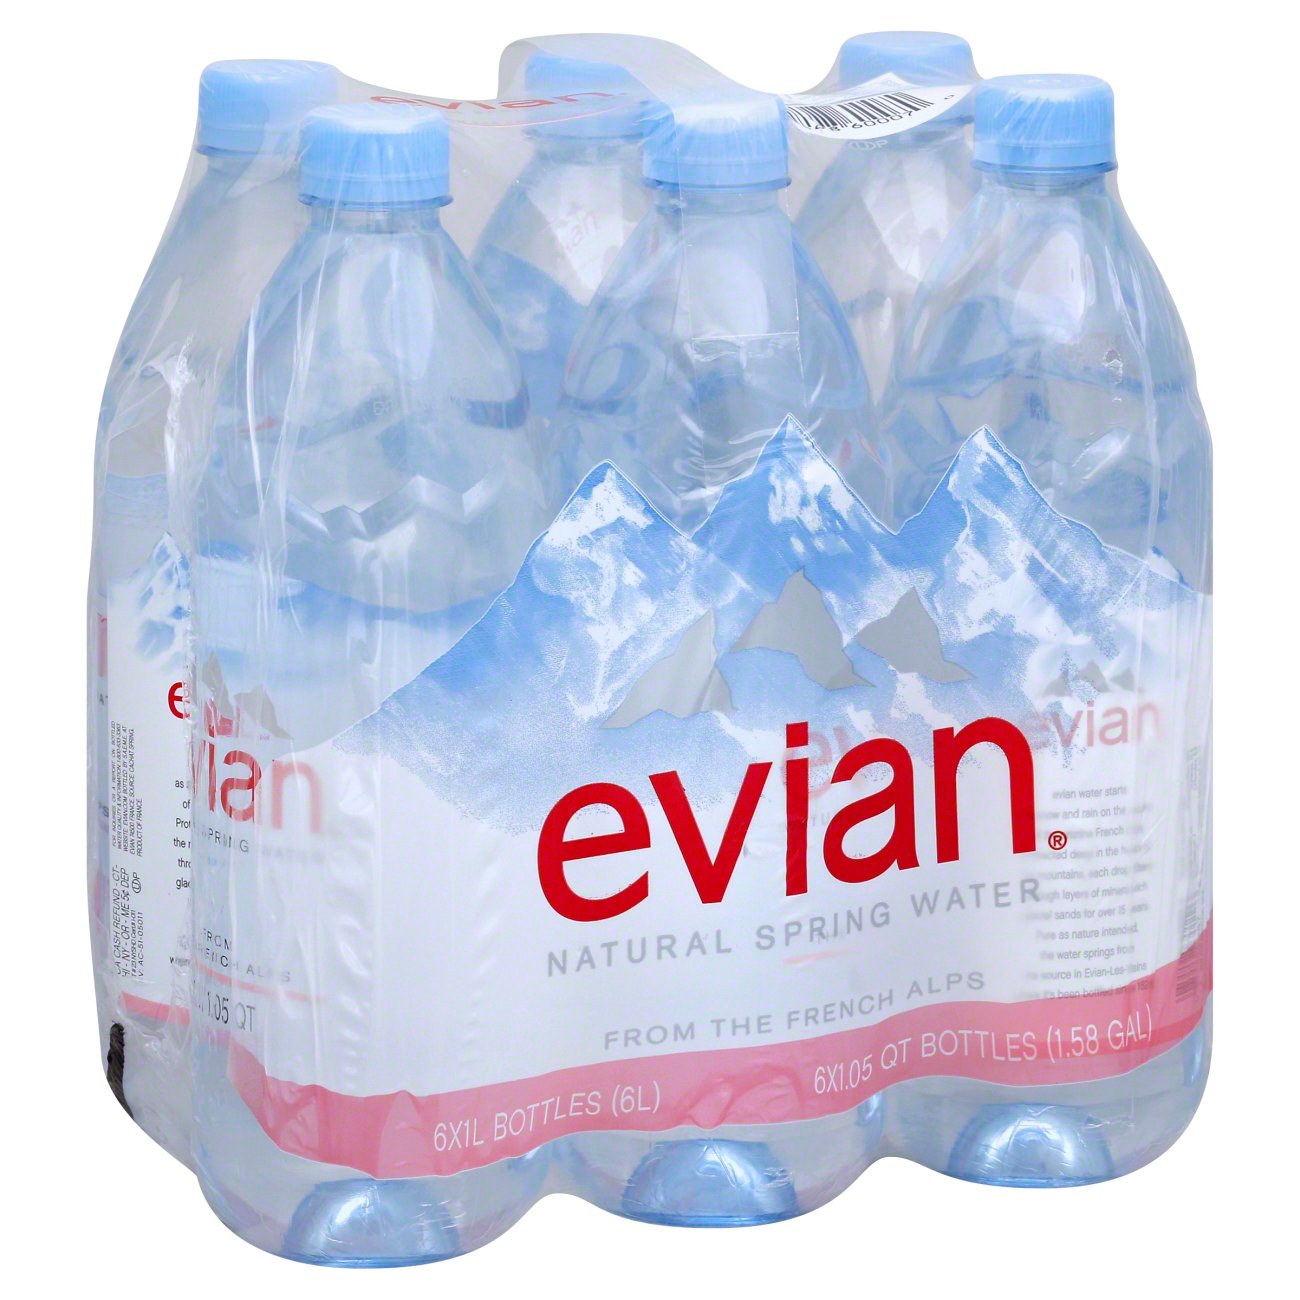 Water evian Evian